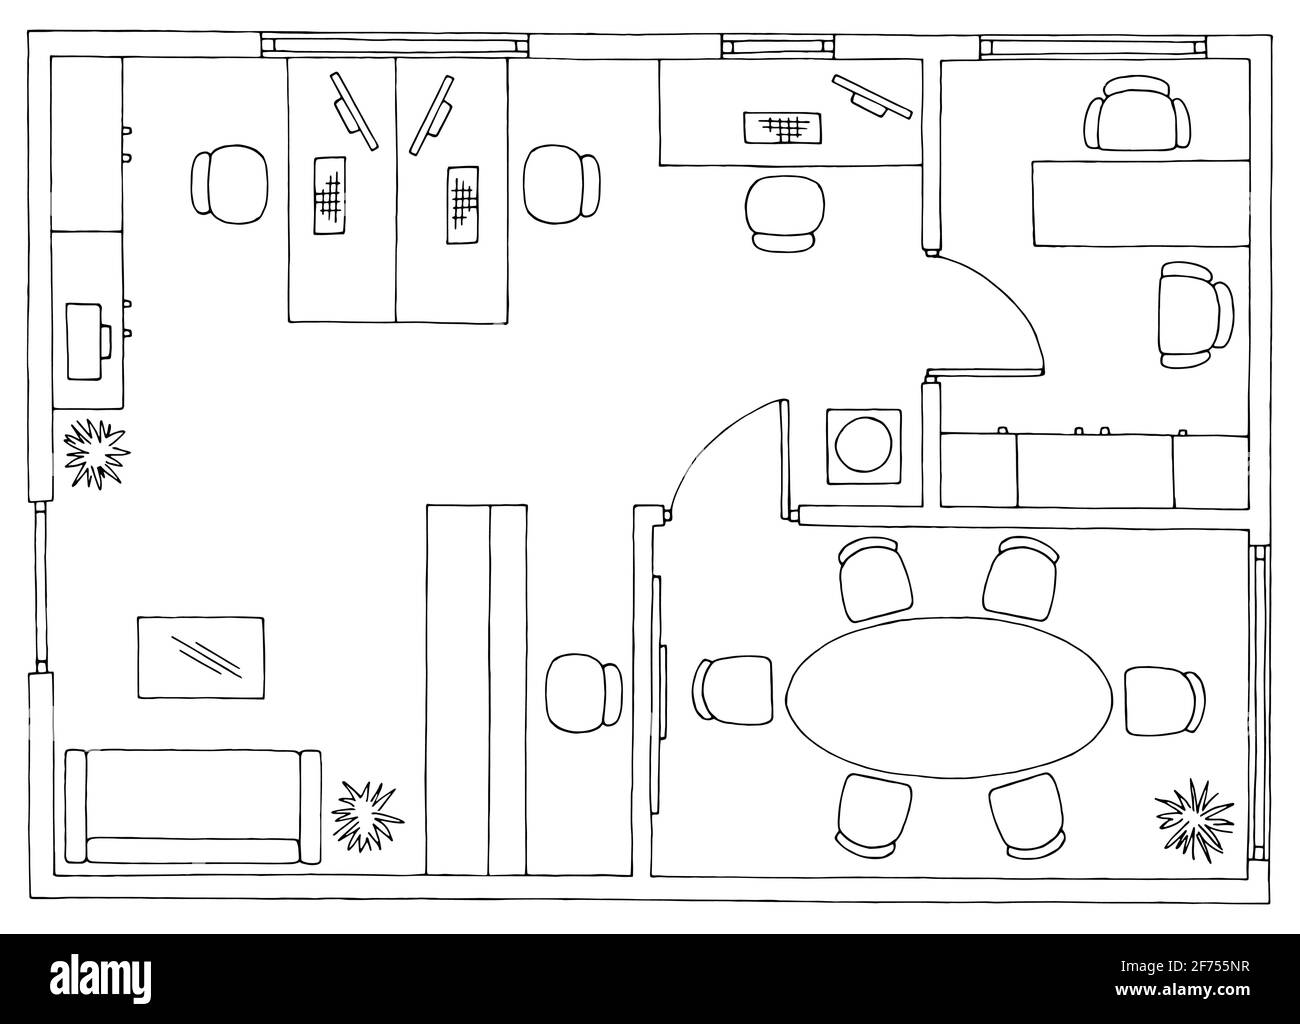 Office plan architecture floor interior furniture graphic black white sketch illustration vector Stock Vector